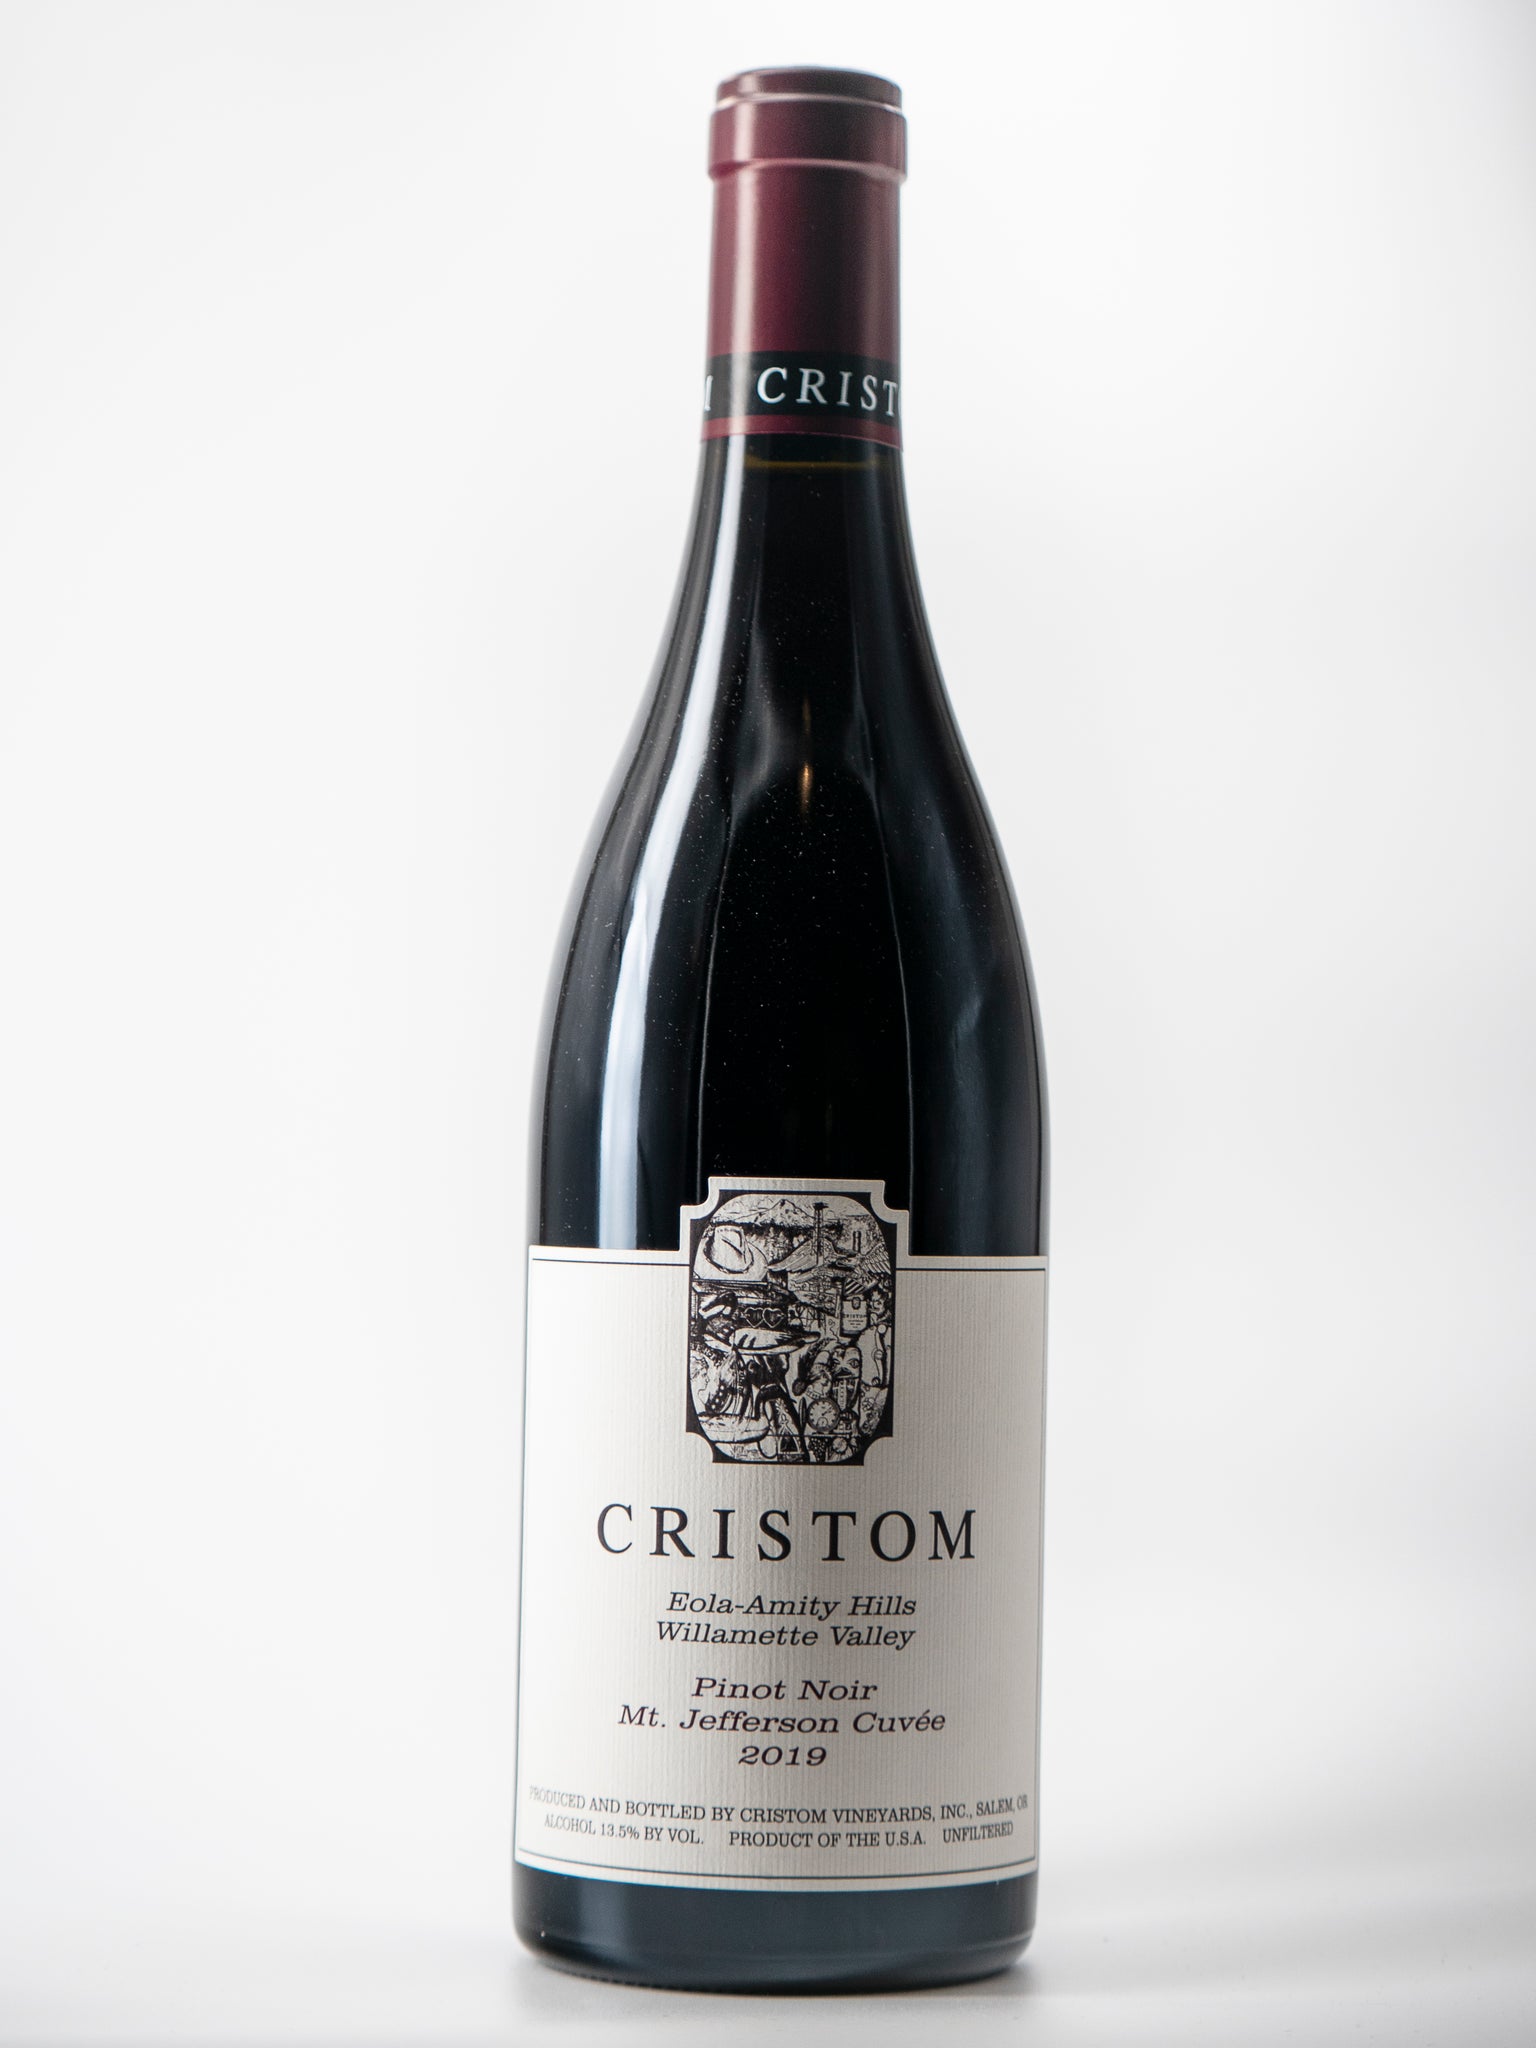 Pinot Noir, Cristom Valley Mt. Jefferson Cuvee